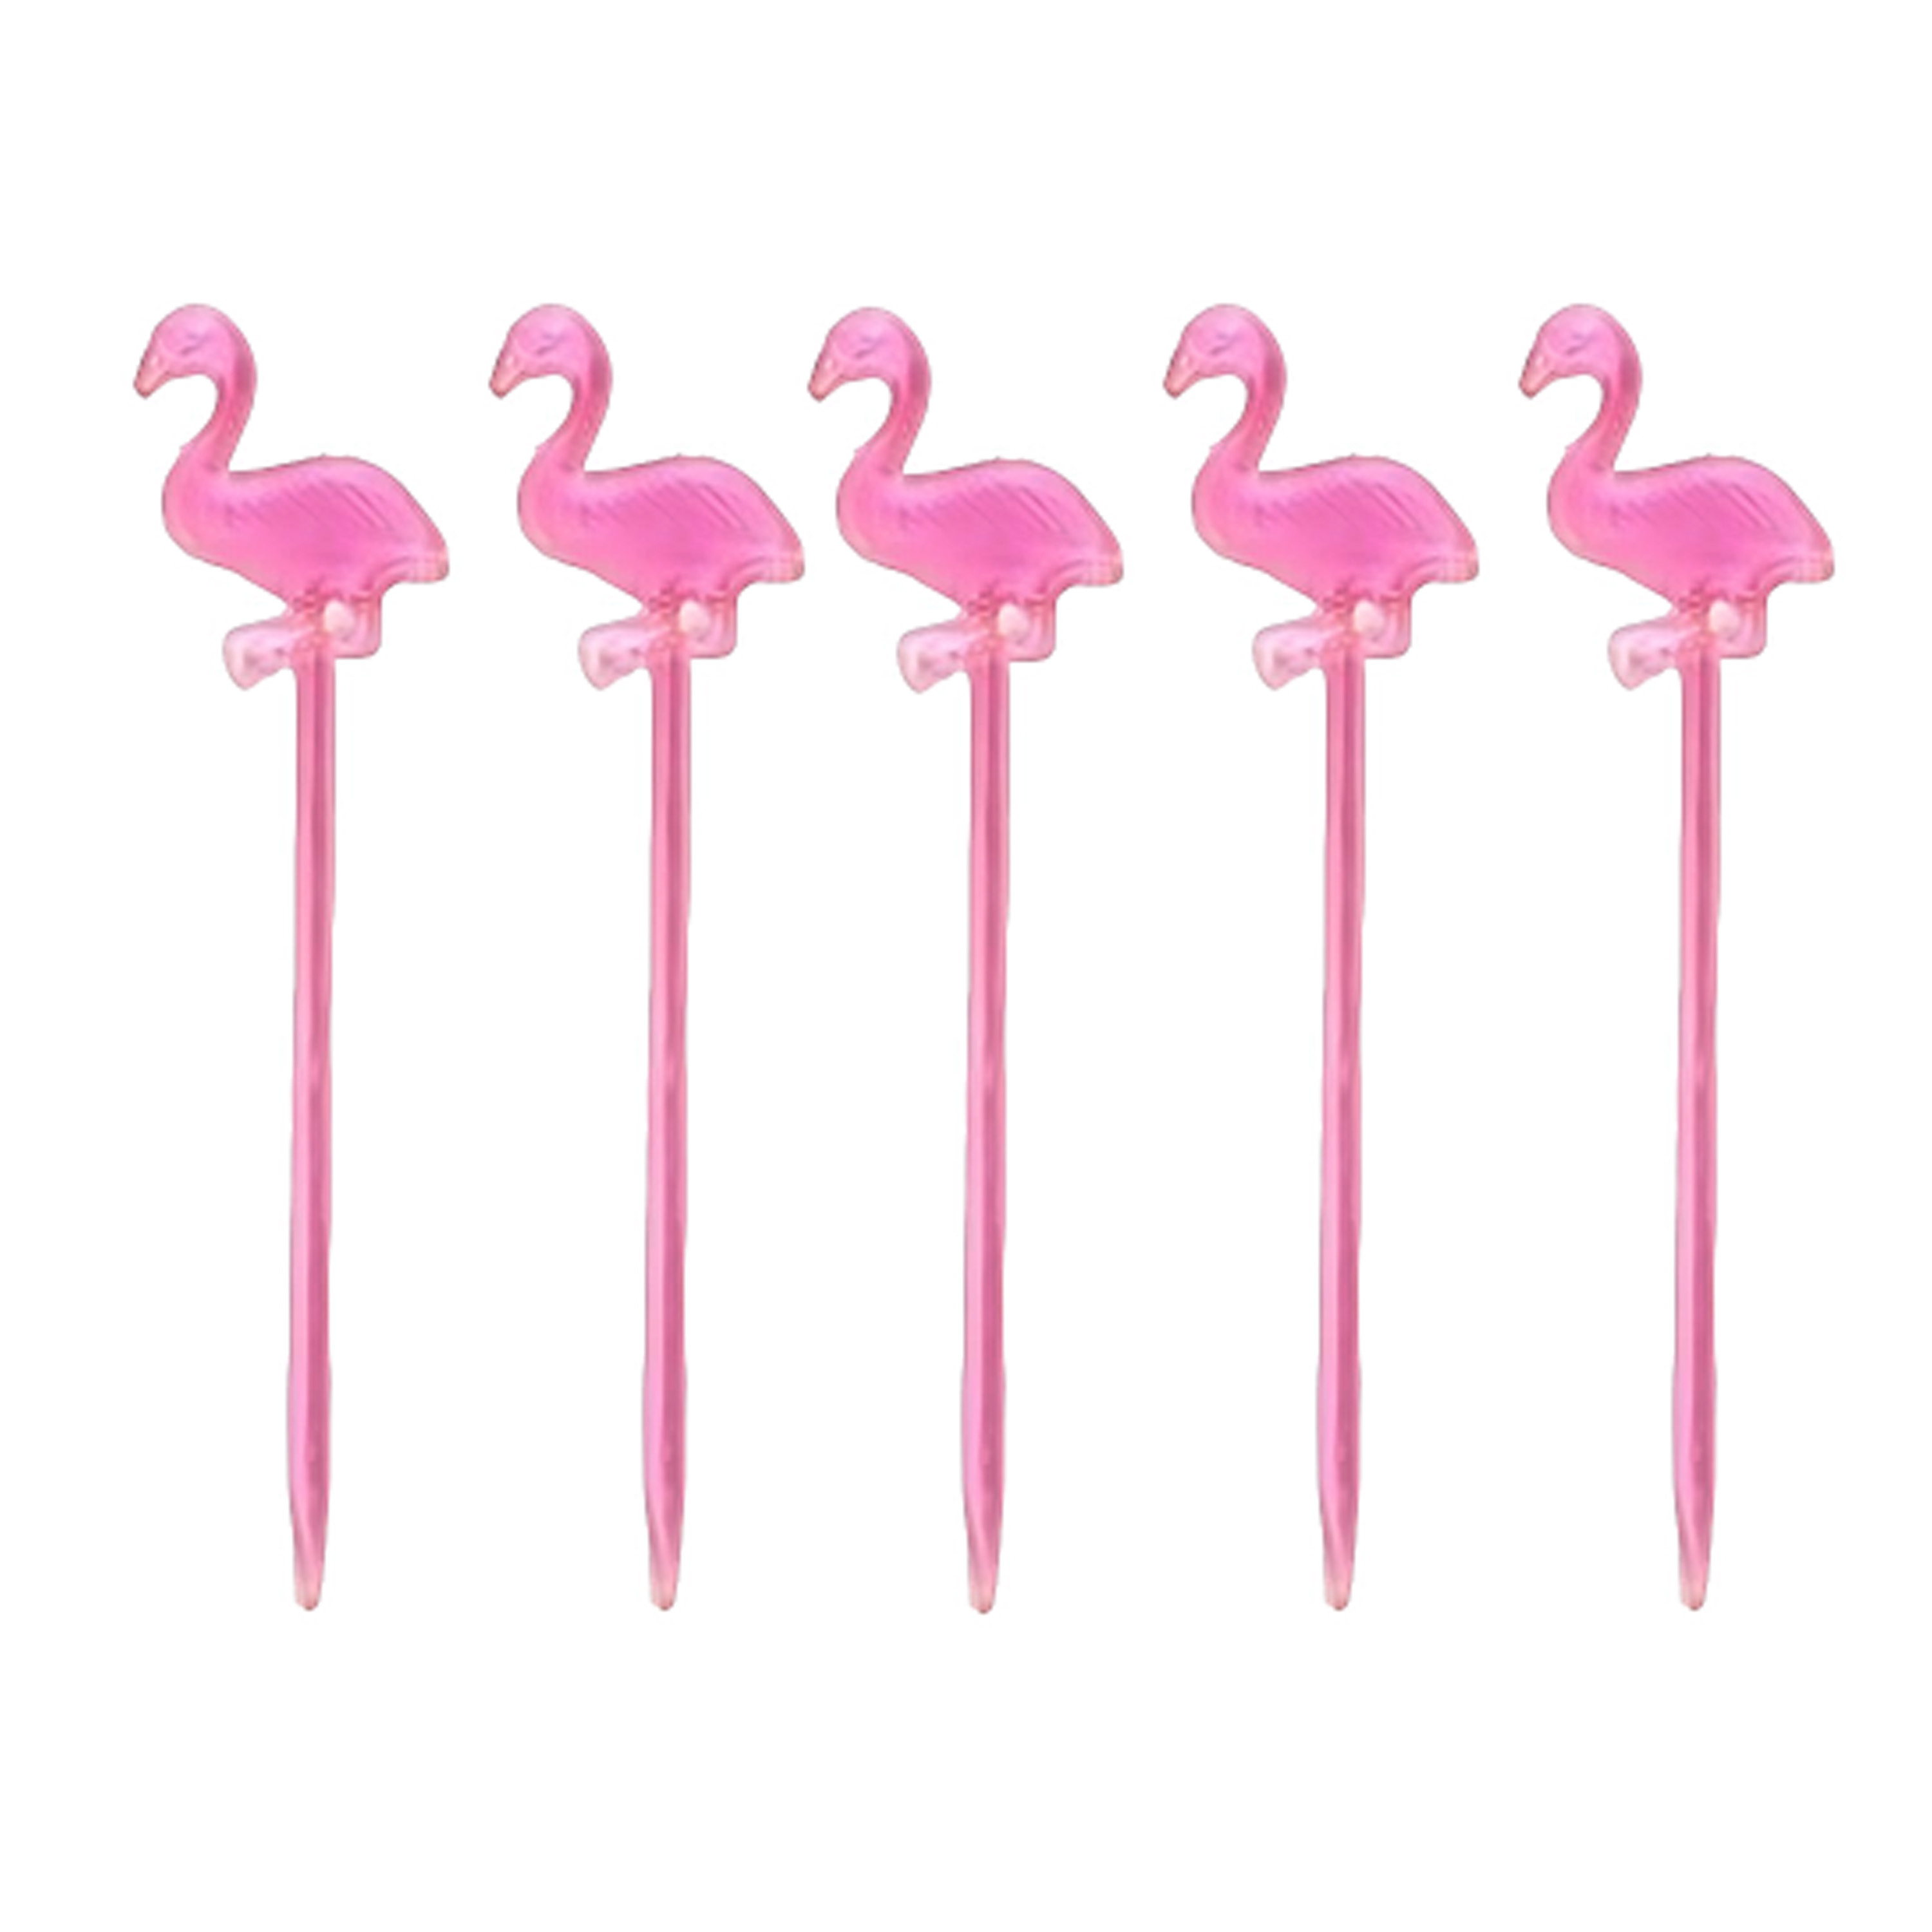 Cocktail-tapas prikkers flamingo 50x stuks roze kunststof 8 cm